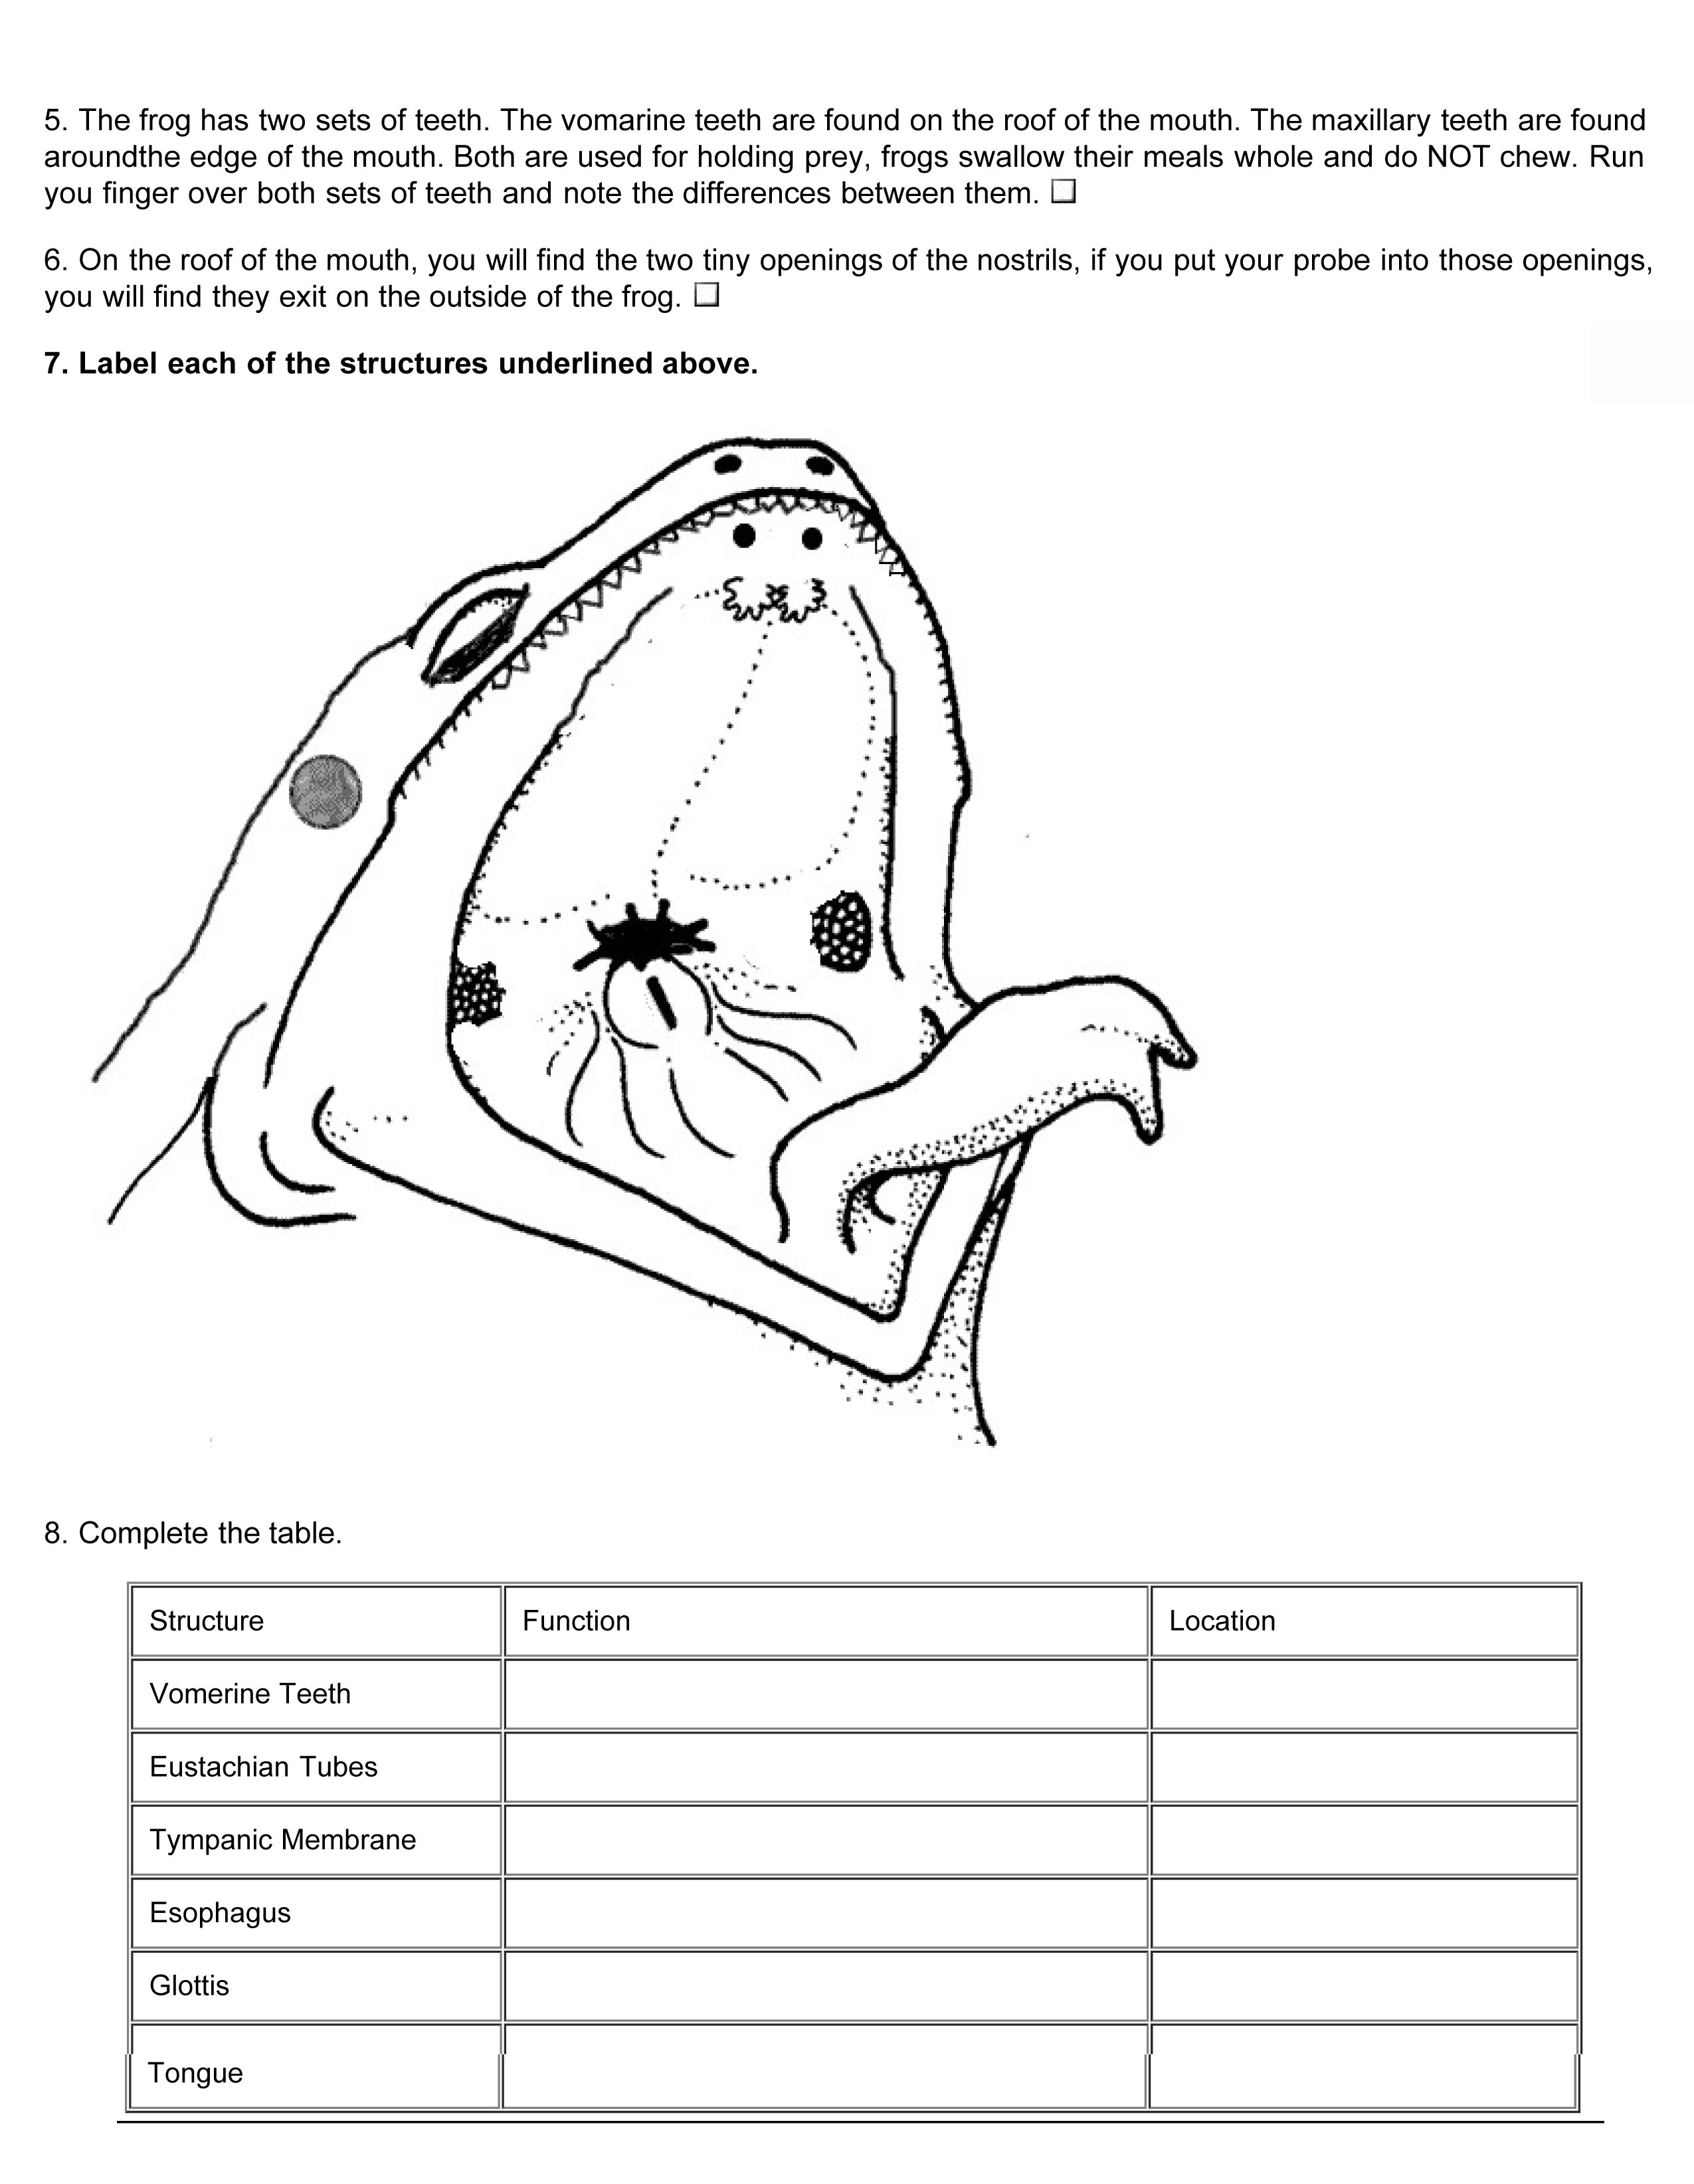 Frog External Anatomy Answers